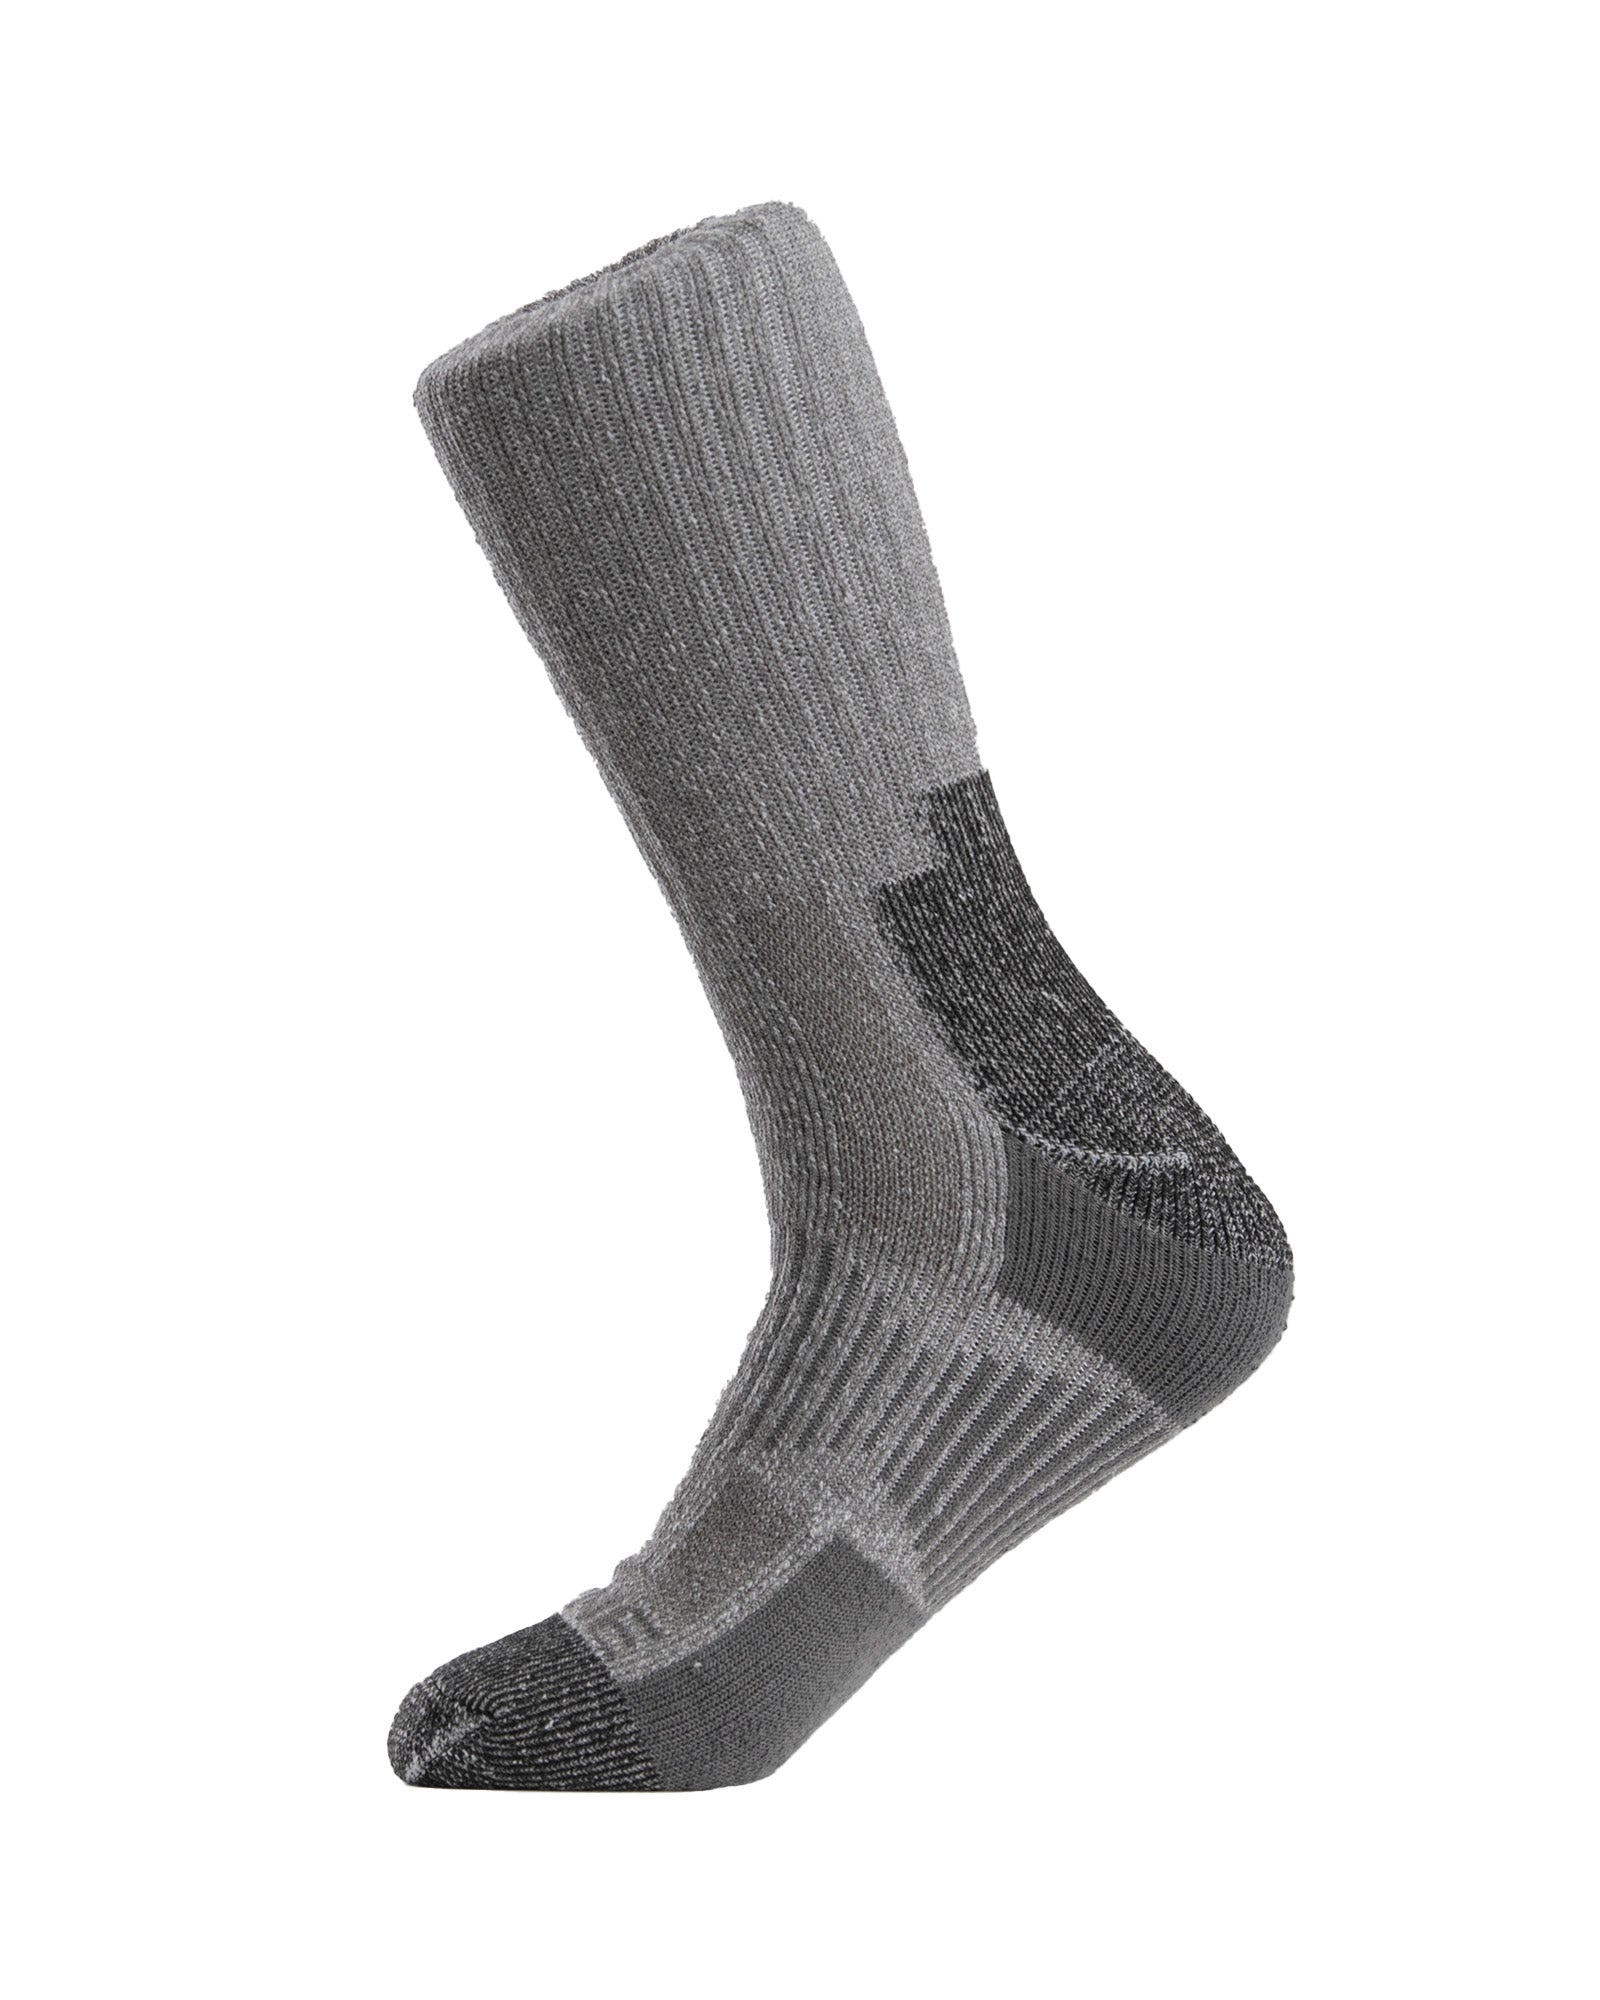 SK105GPH Men's Wool-Blend Heavy-Duty Boot Socks 1 Pack